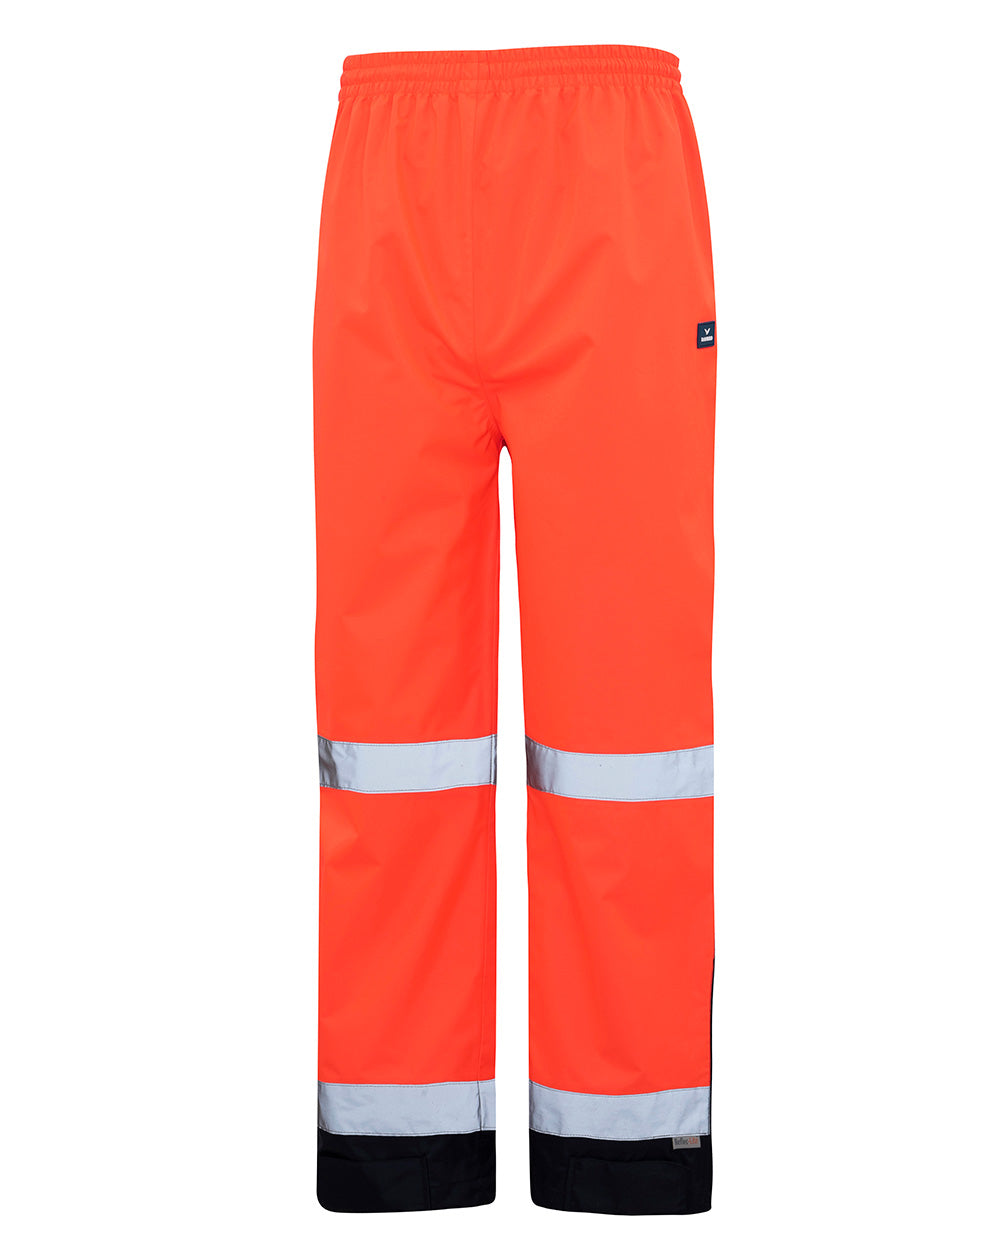 Utility Pant in Fluoro Orange & Navy